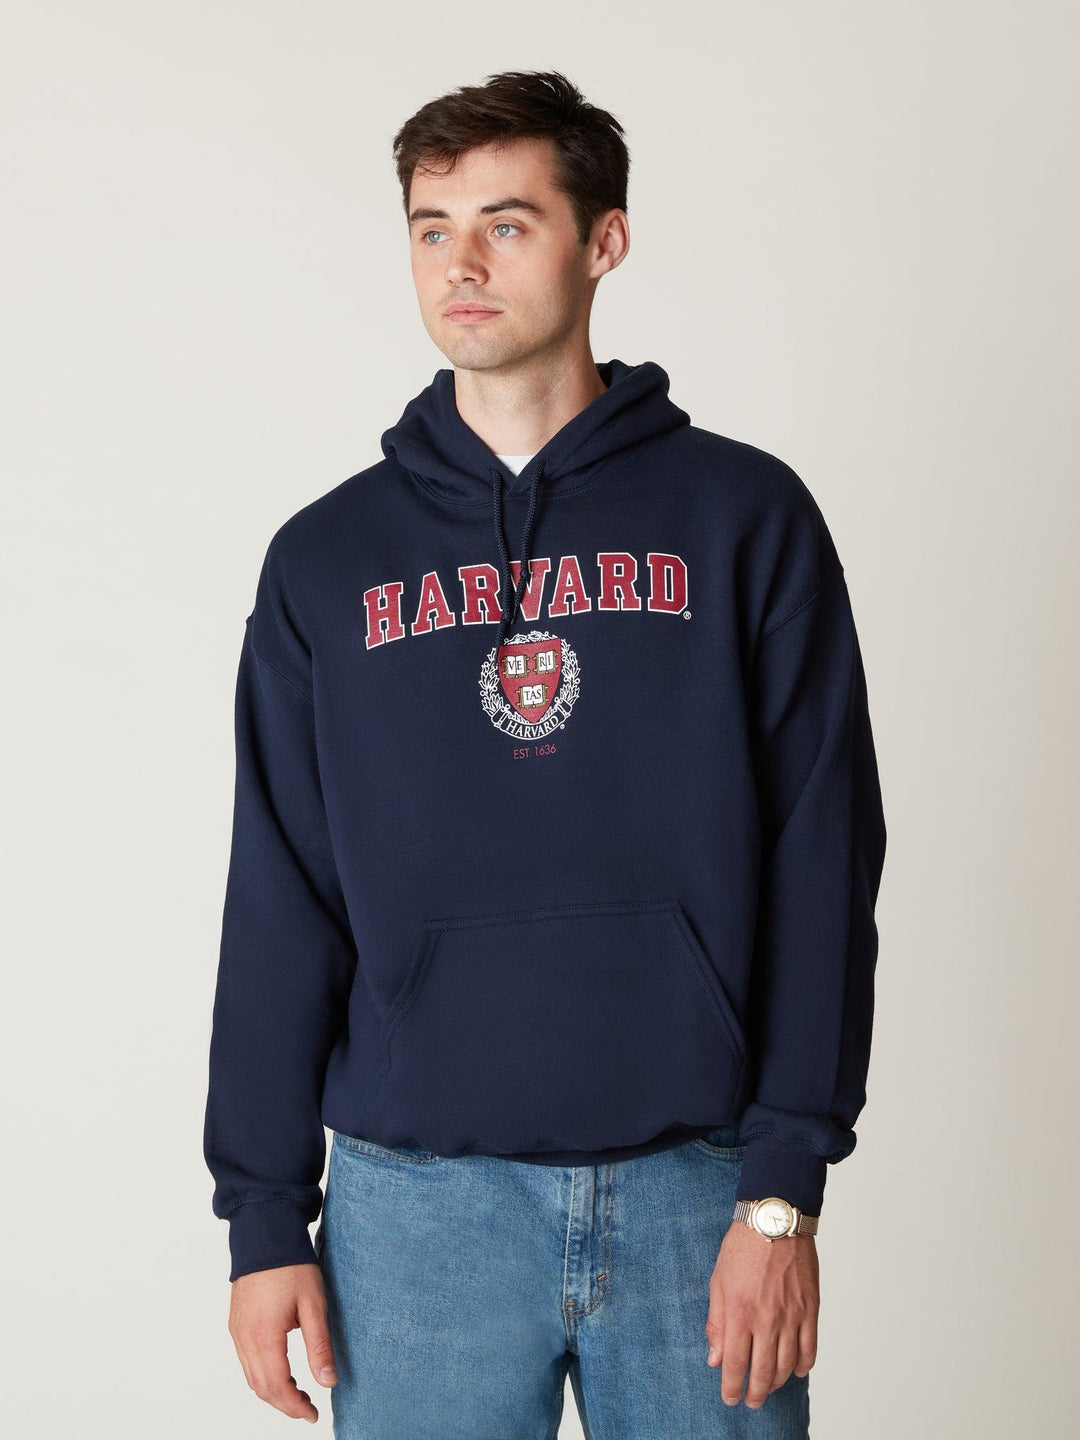 Accessories – The Harvard Shop